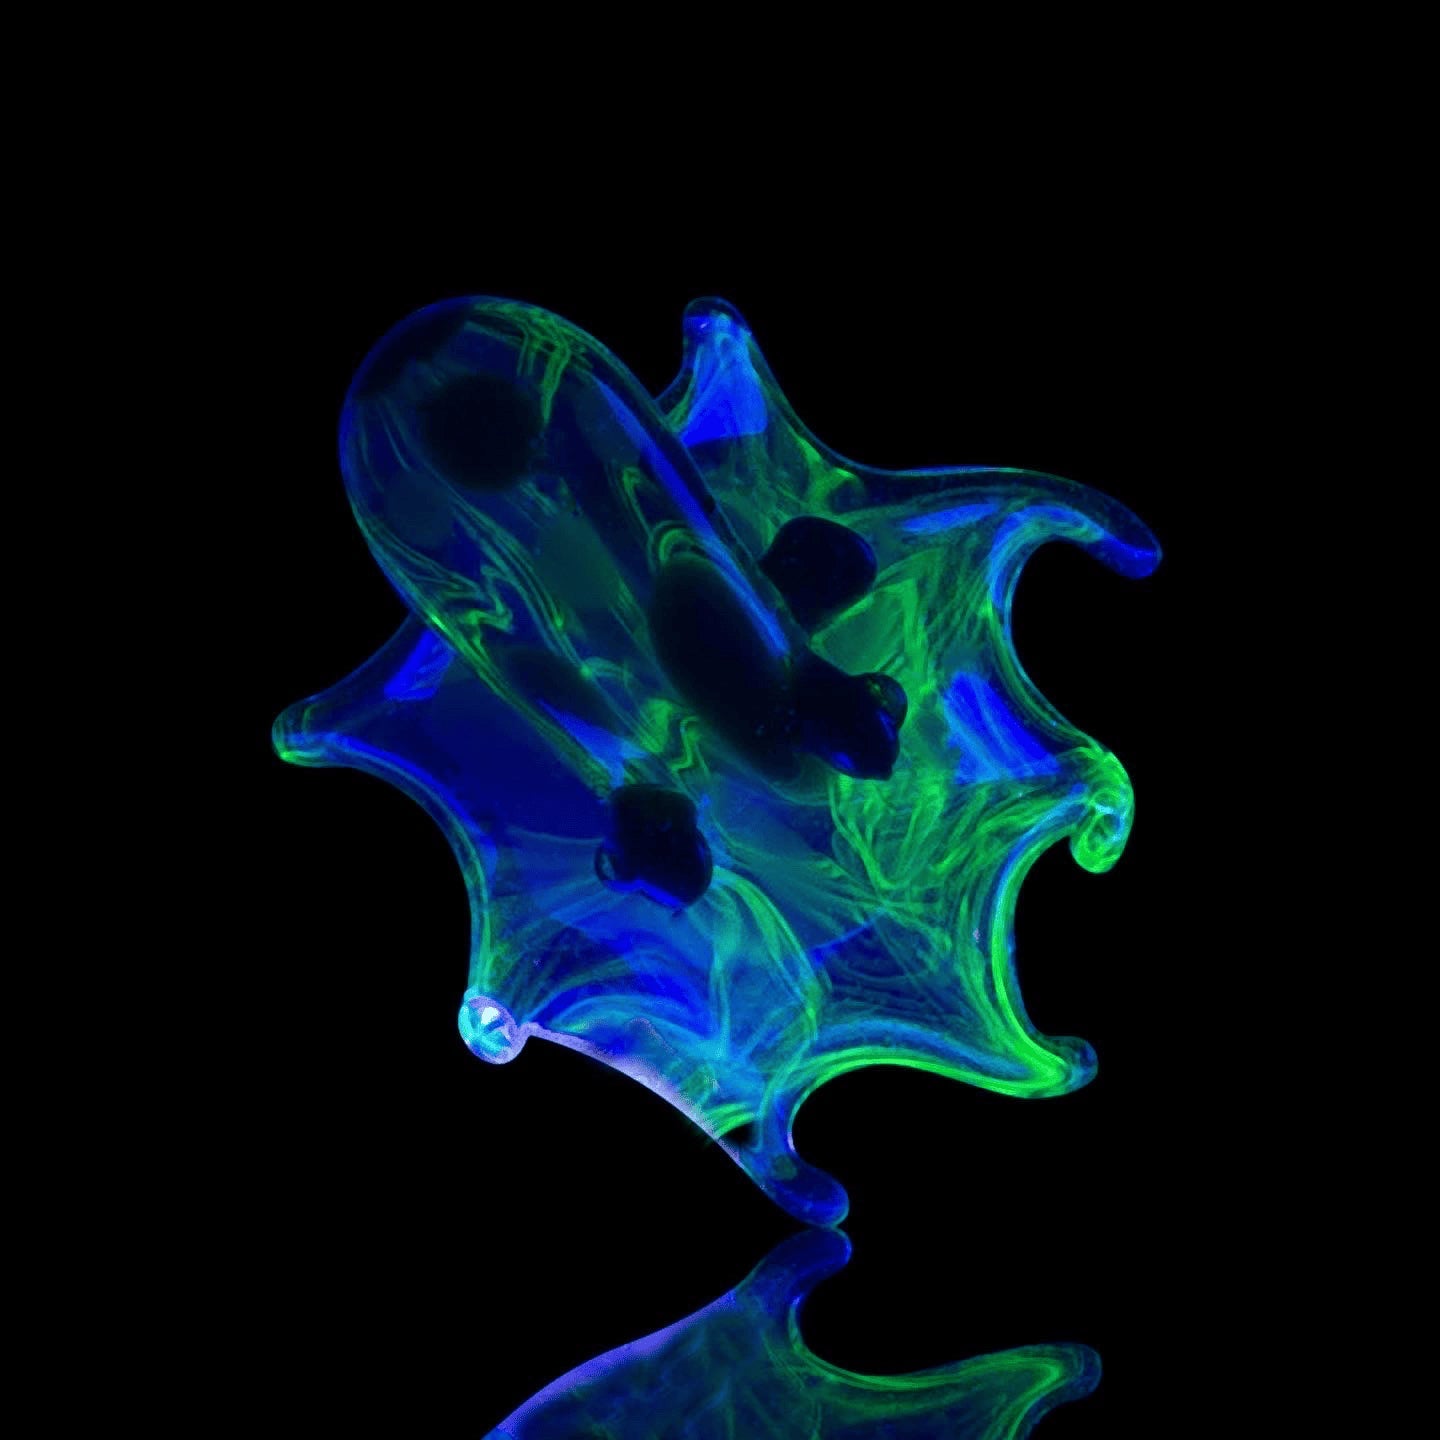 innovative glass pendant - Collab Octopus Pendant by Burtoni x Scomo Moanet (Scribble Season 2022)